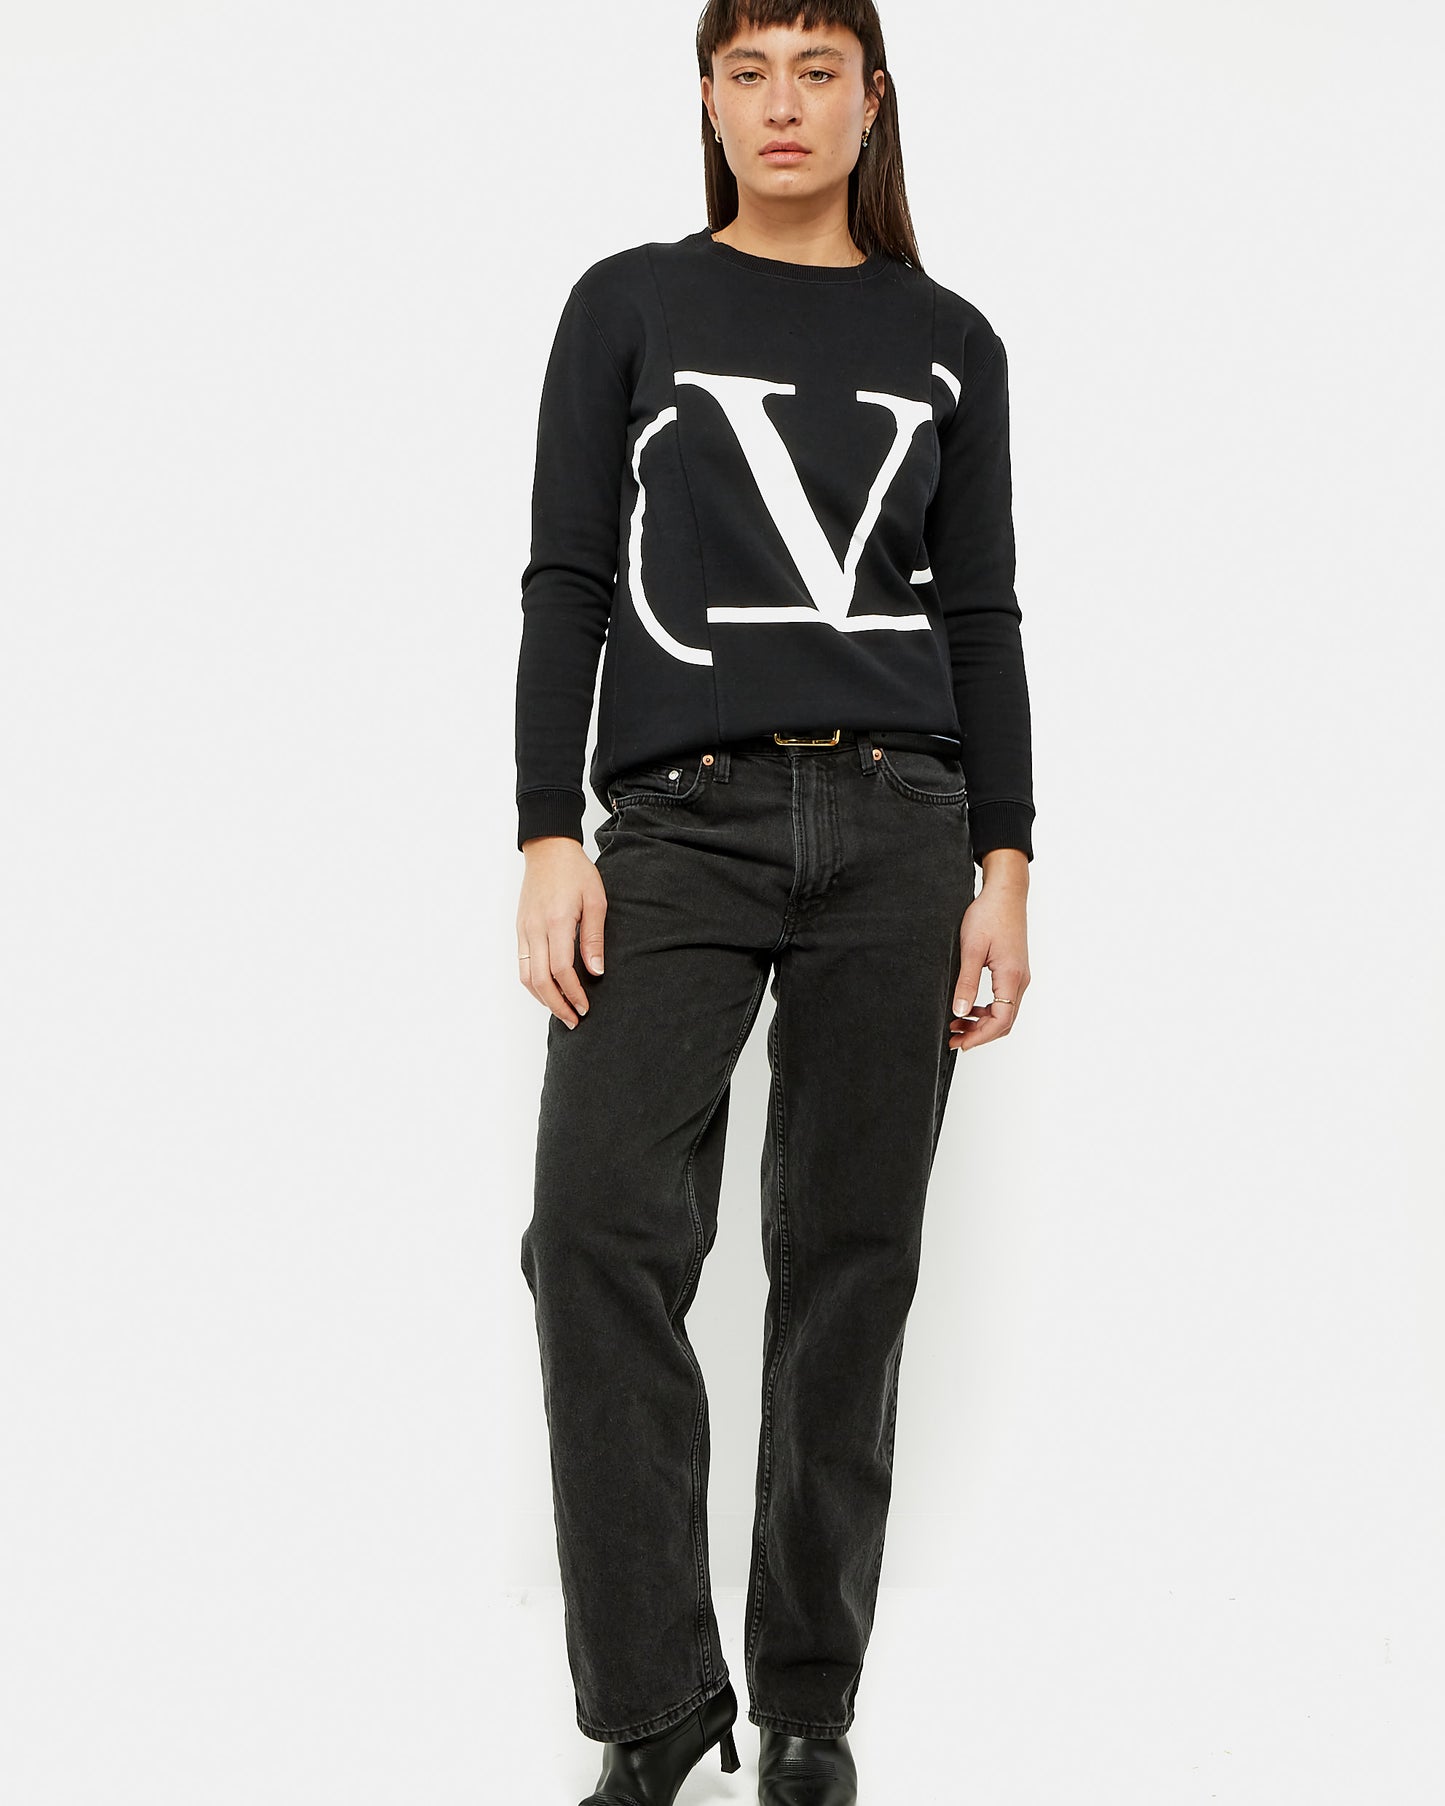 Valentino Black V Logo Cotton Crewneck Sweater - XS